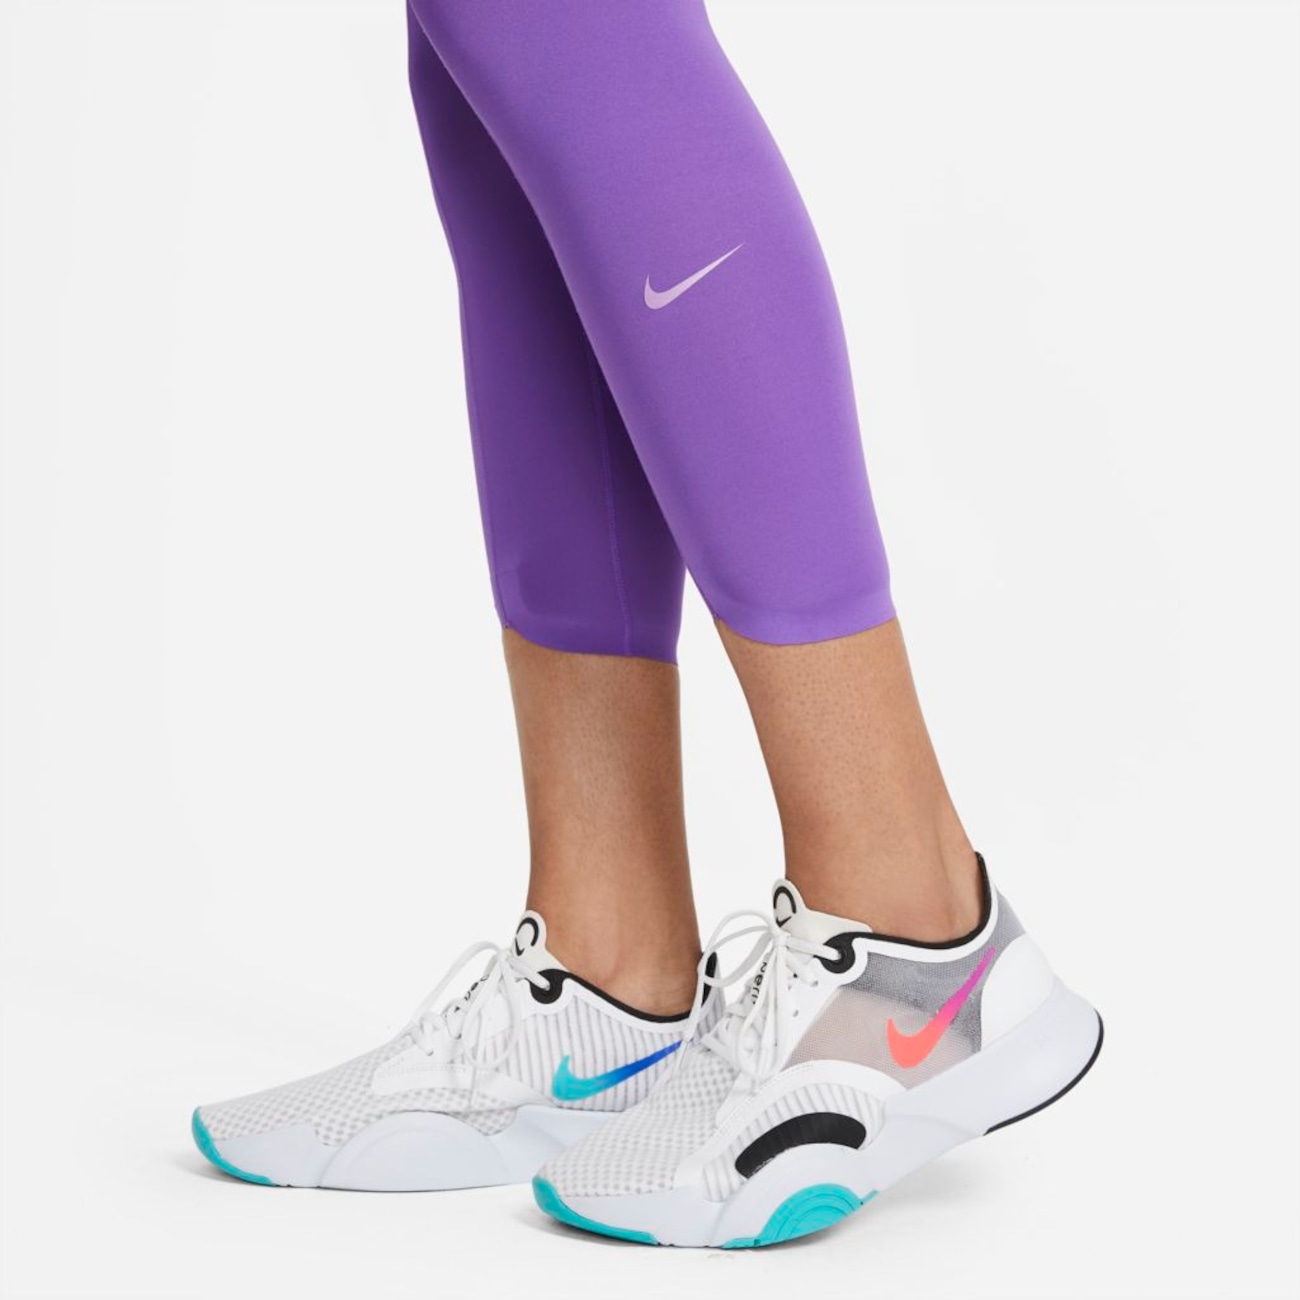 Legging Nike One Luxe Icon Clash Feminina - Foto 6